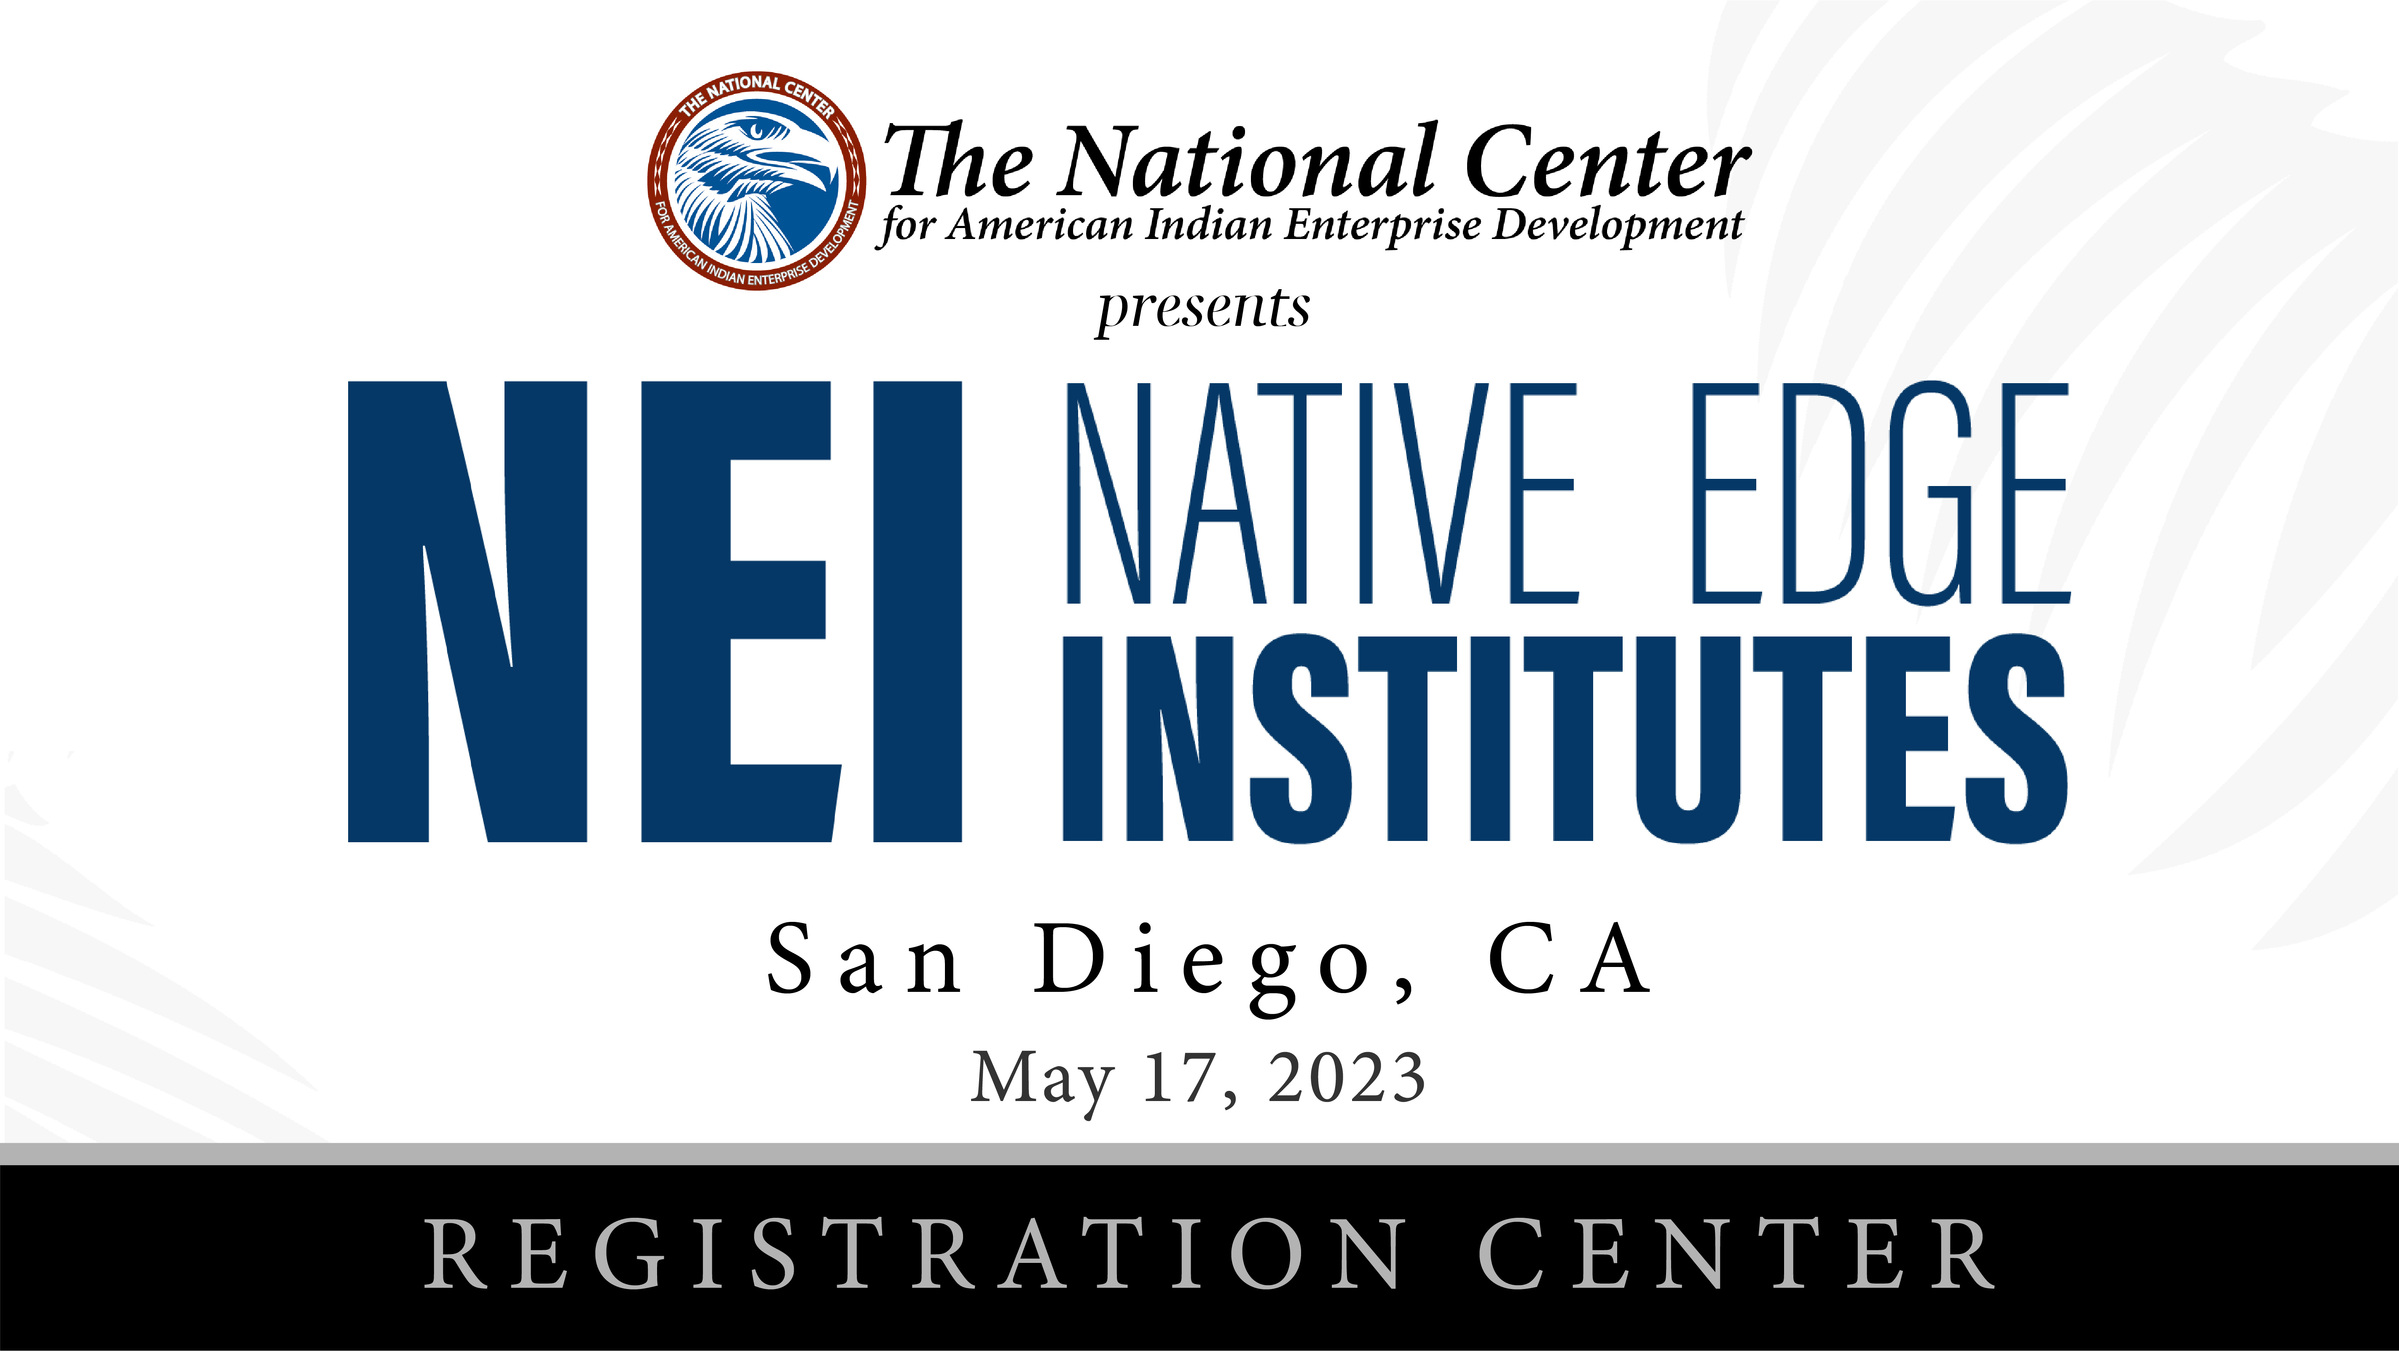 Native Edge Institute-San Diego, CA 